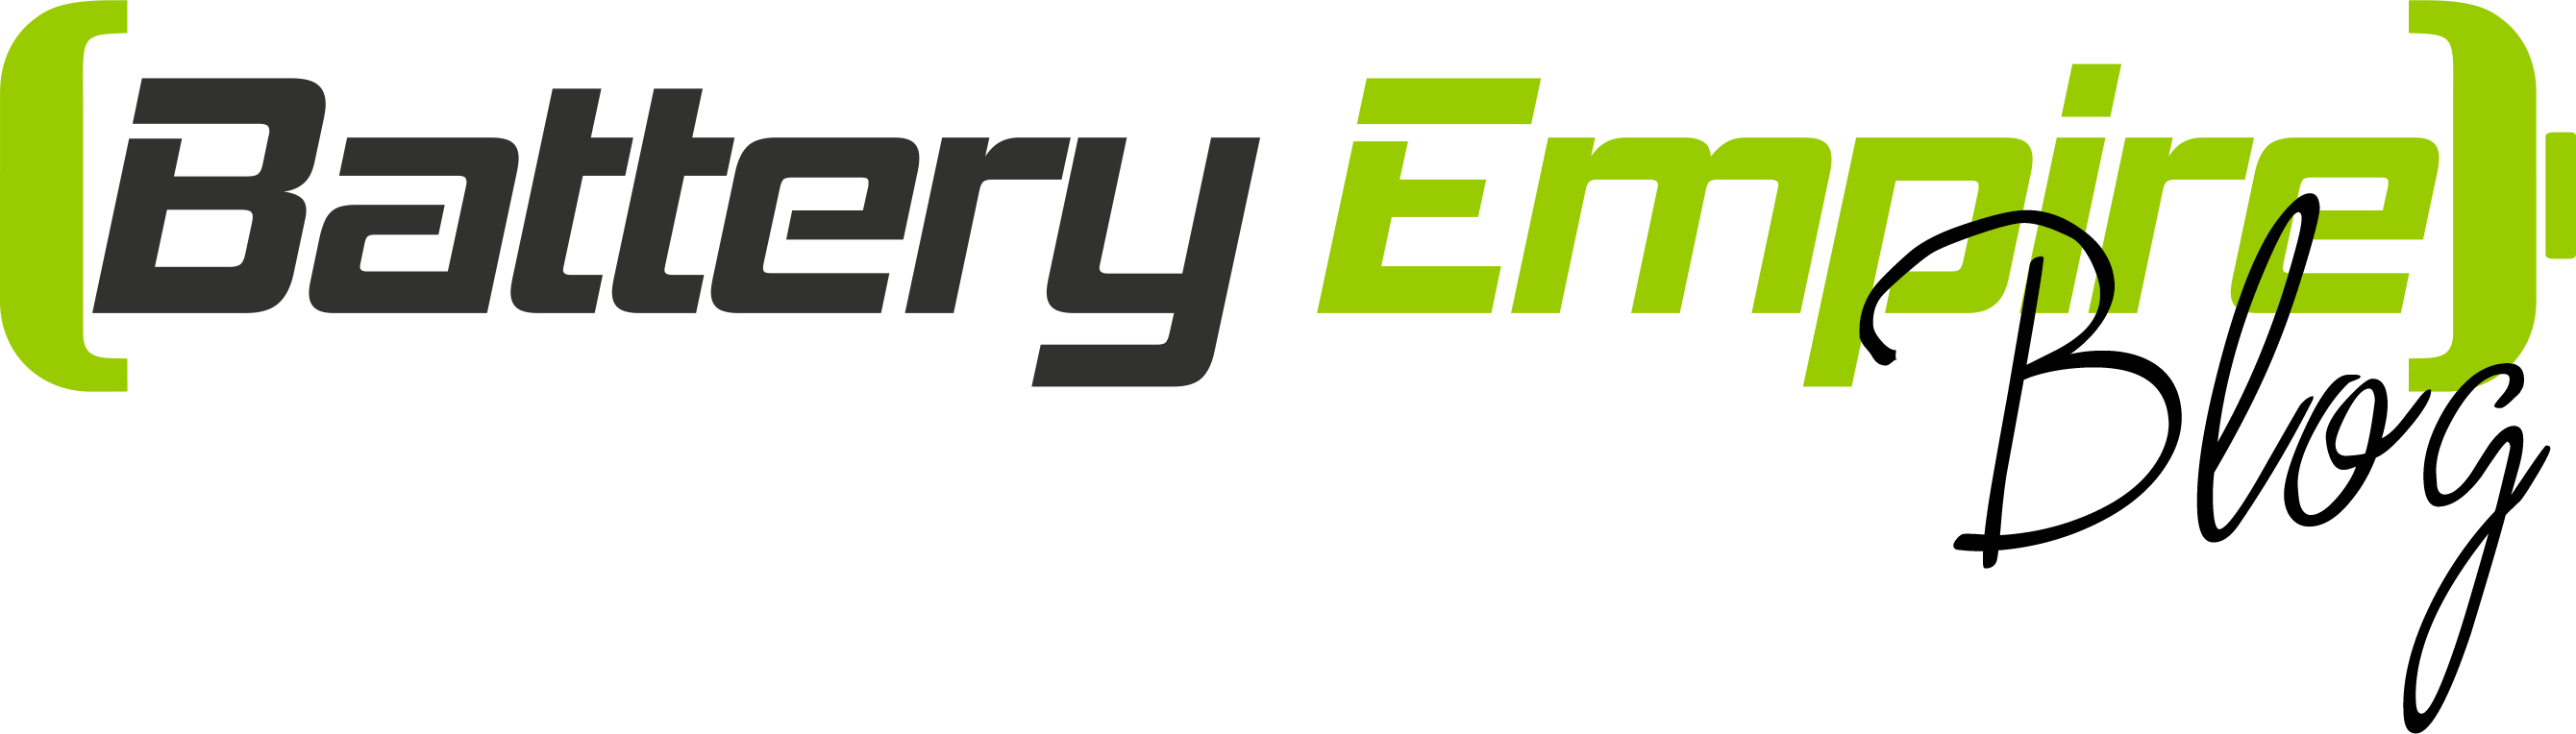 Empire Battery Logo - Battery Empire Blog -